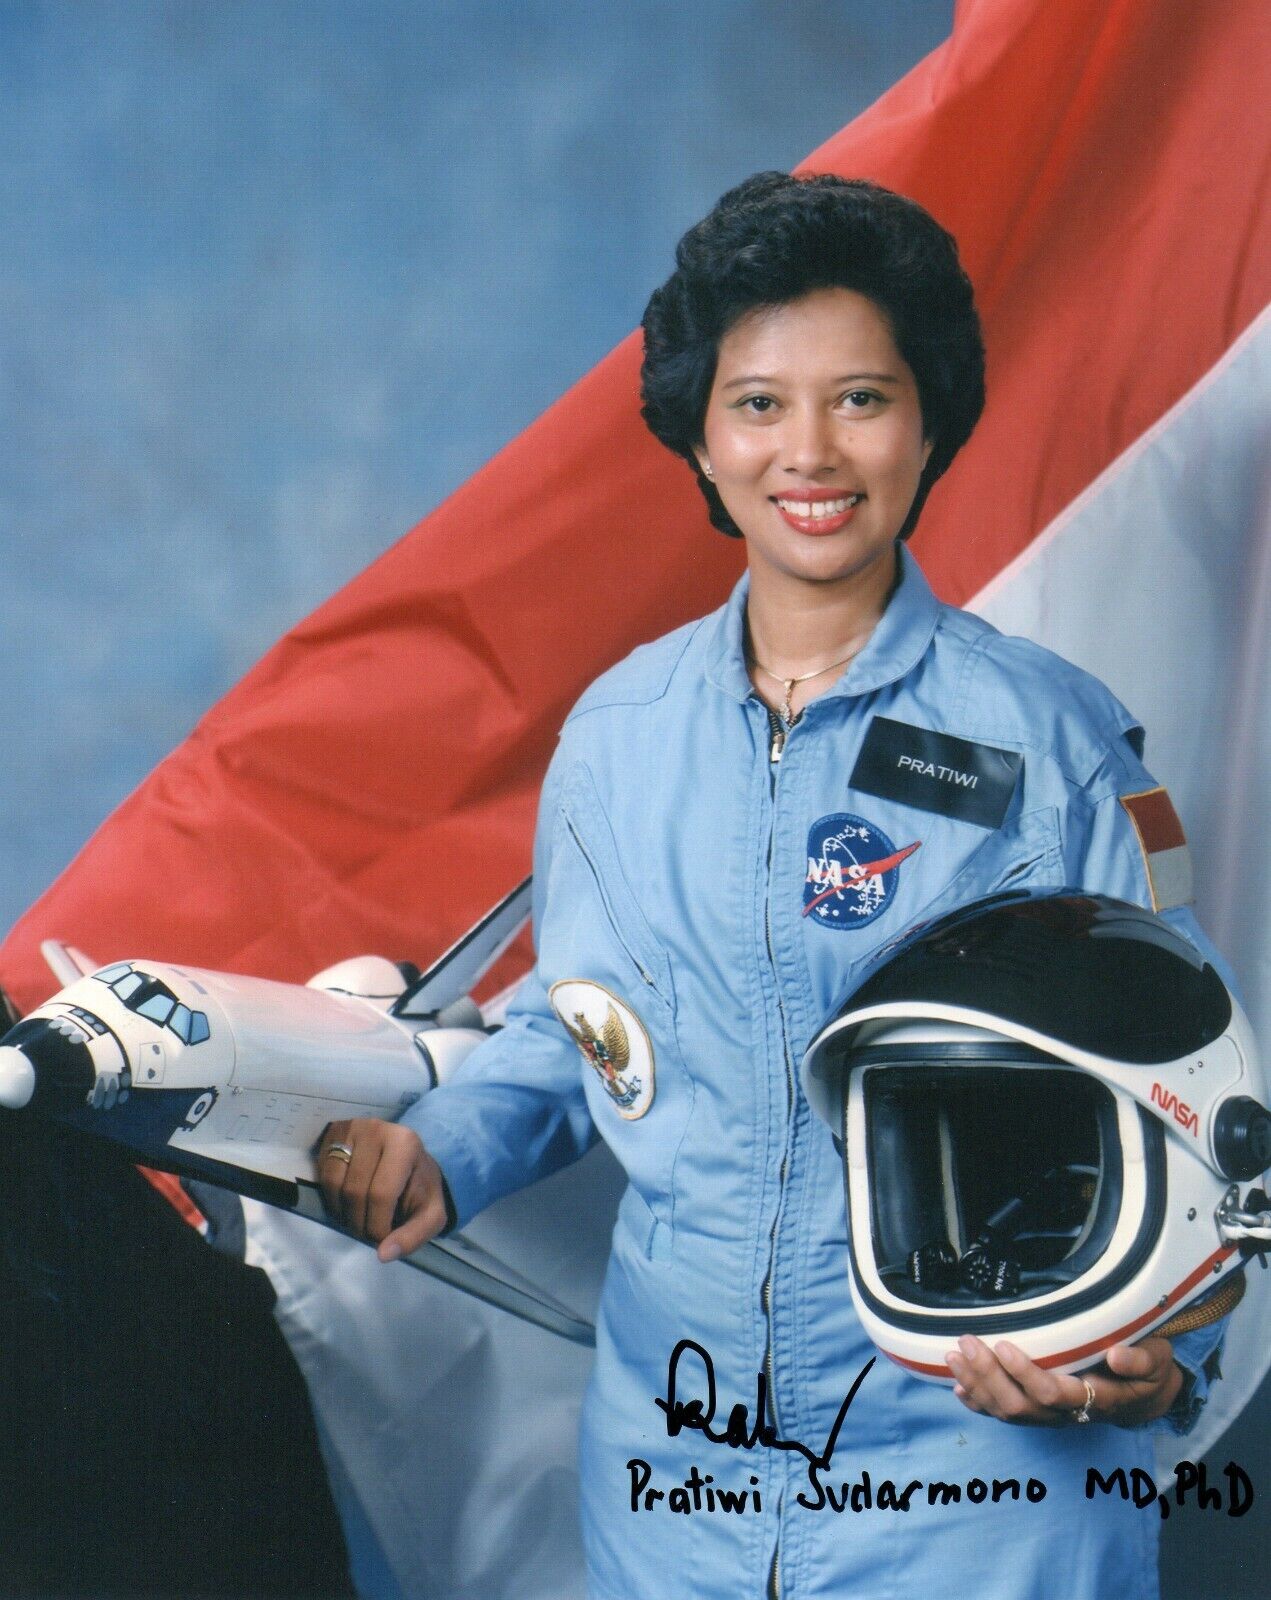 8x10 Original Autographed Photo of Indonesian Astronaut Pratiwi Sudarmono